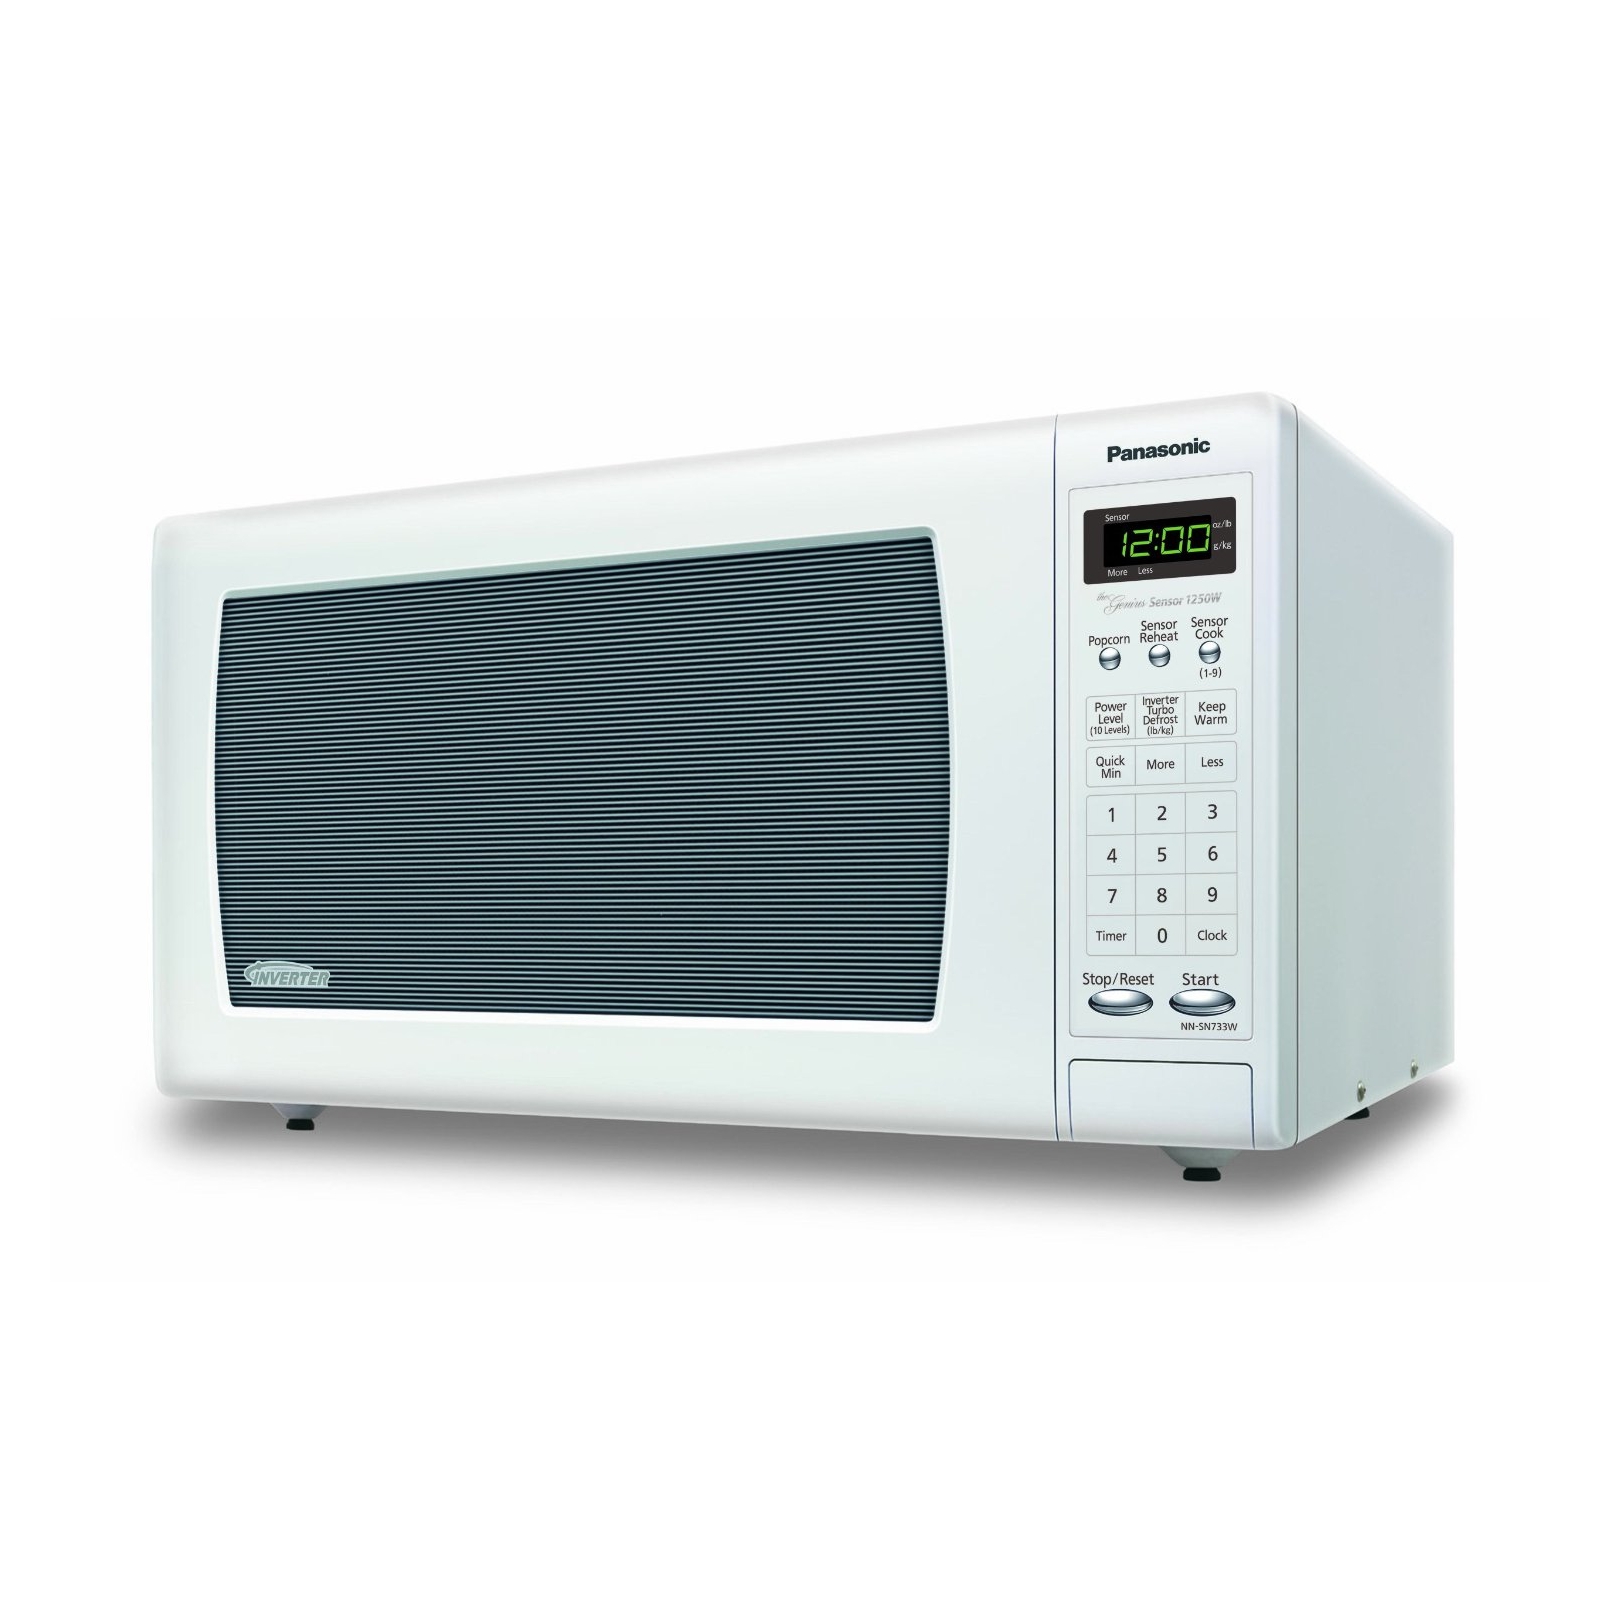 Panasonic 1.6cf Microwave White - Appliances - Microwaves - Countertop